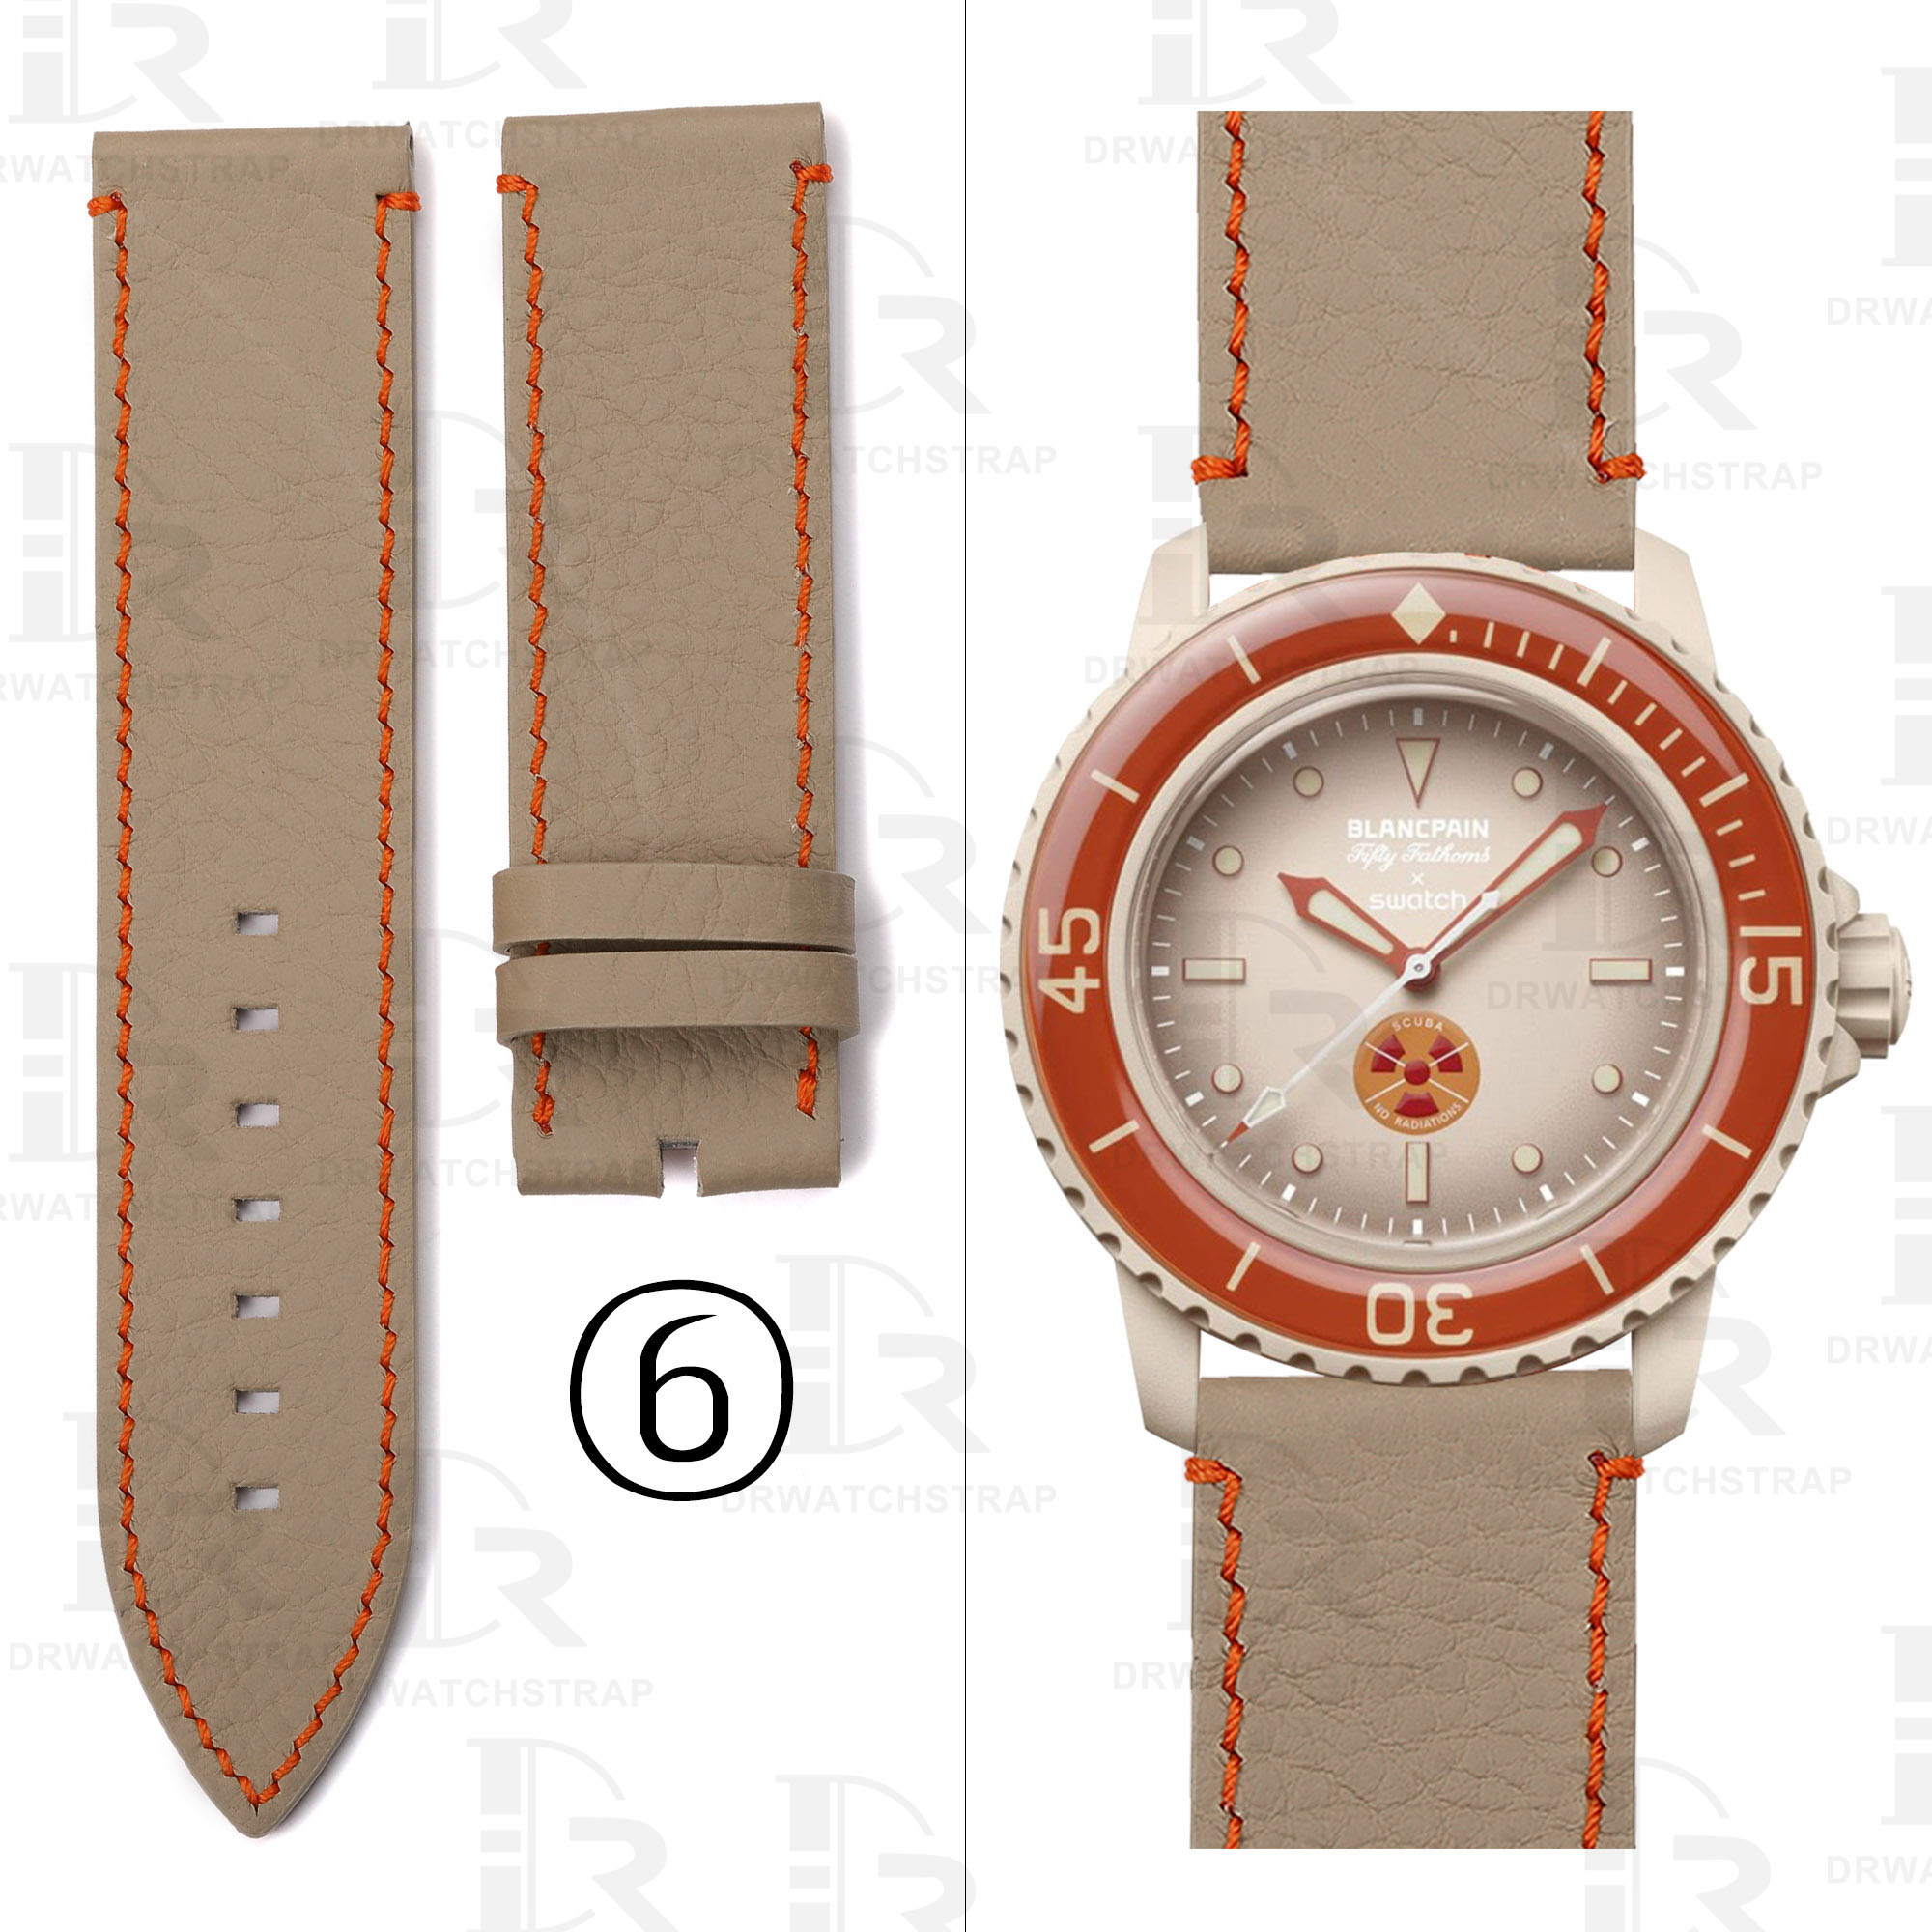 Buy Custom Blancpain x Swatch leather strap 22mm Orange Calfskin leather watch band (3)